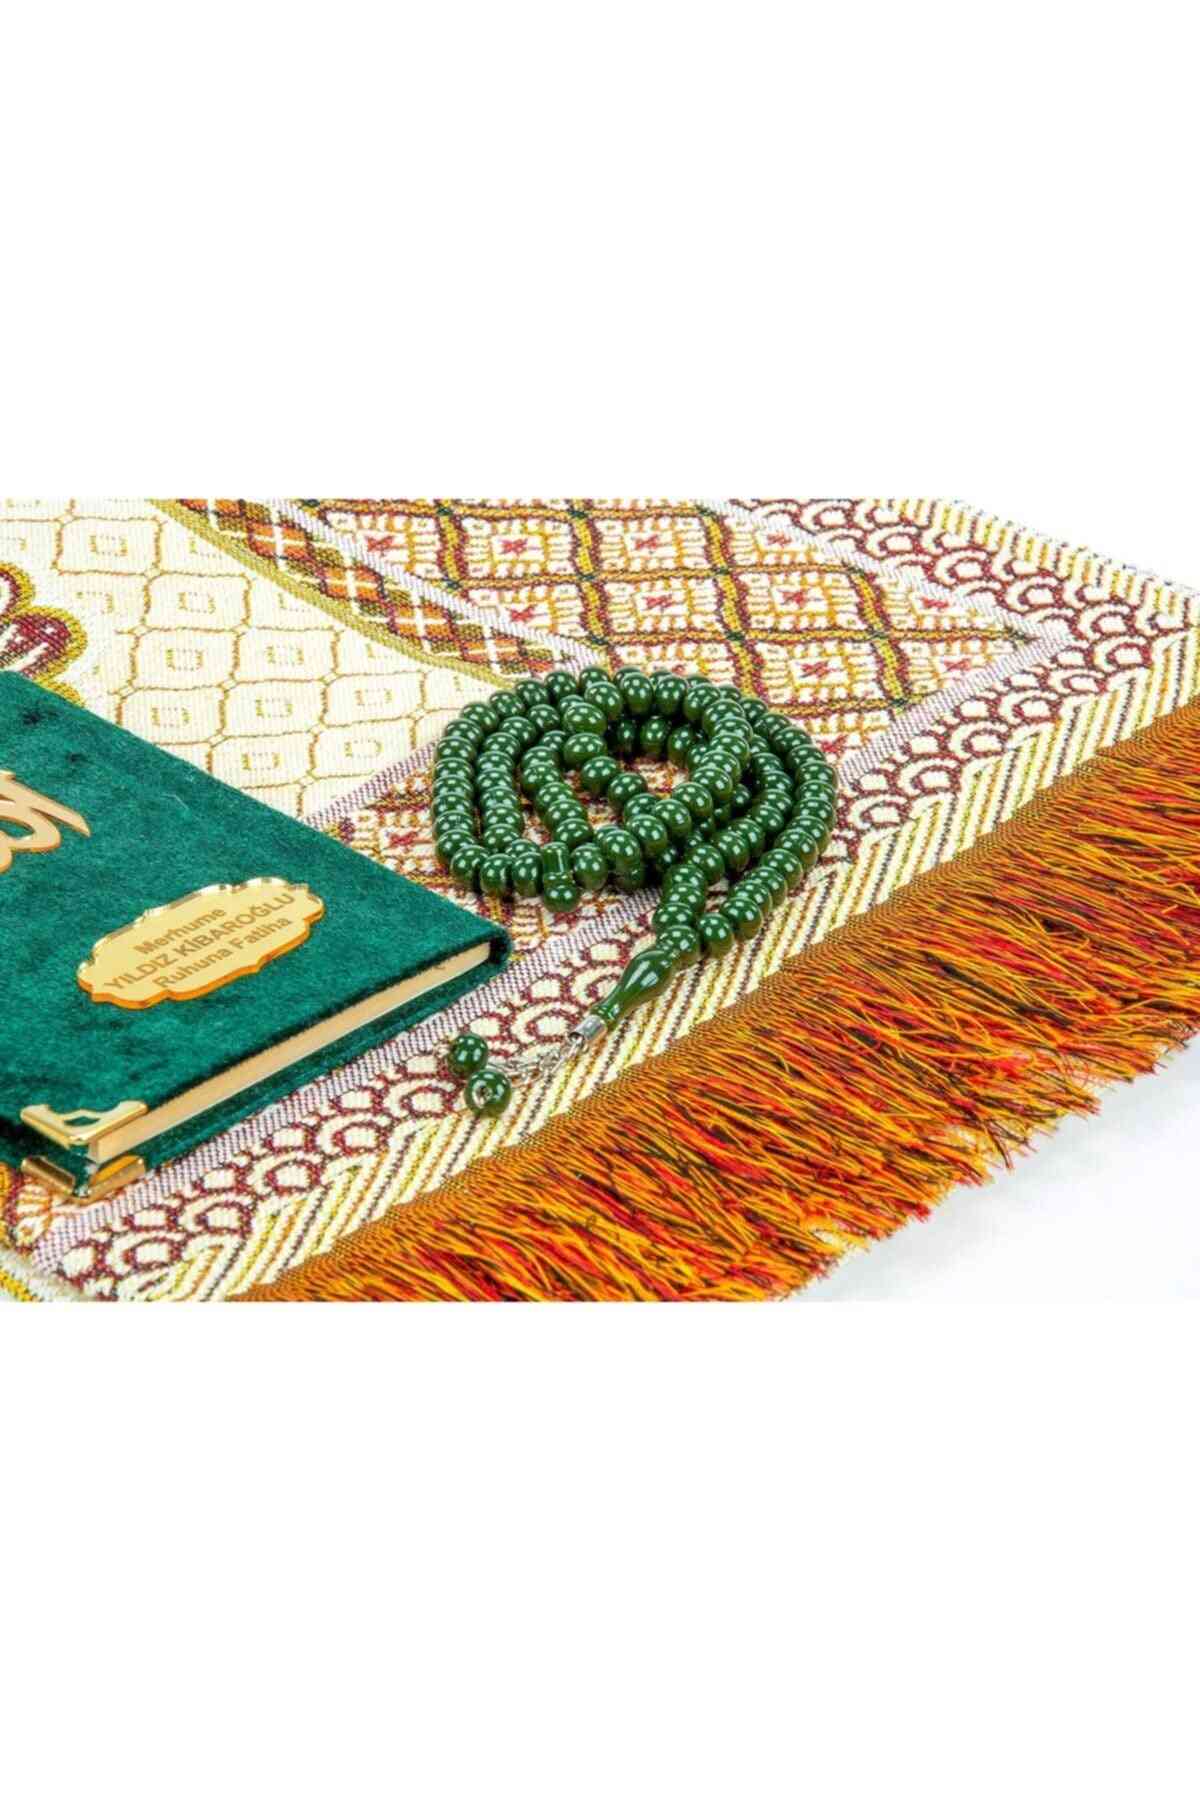 Green Prayer- Carpet Yaseen Book, Haj Umrah, Mat Set